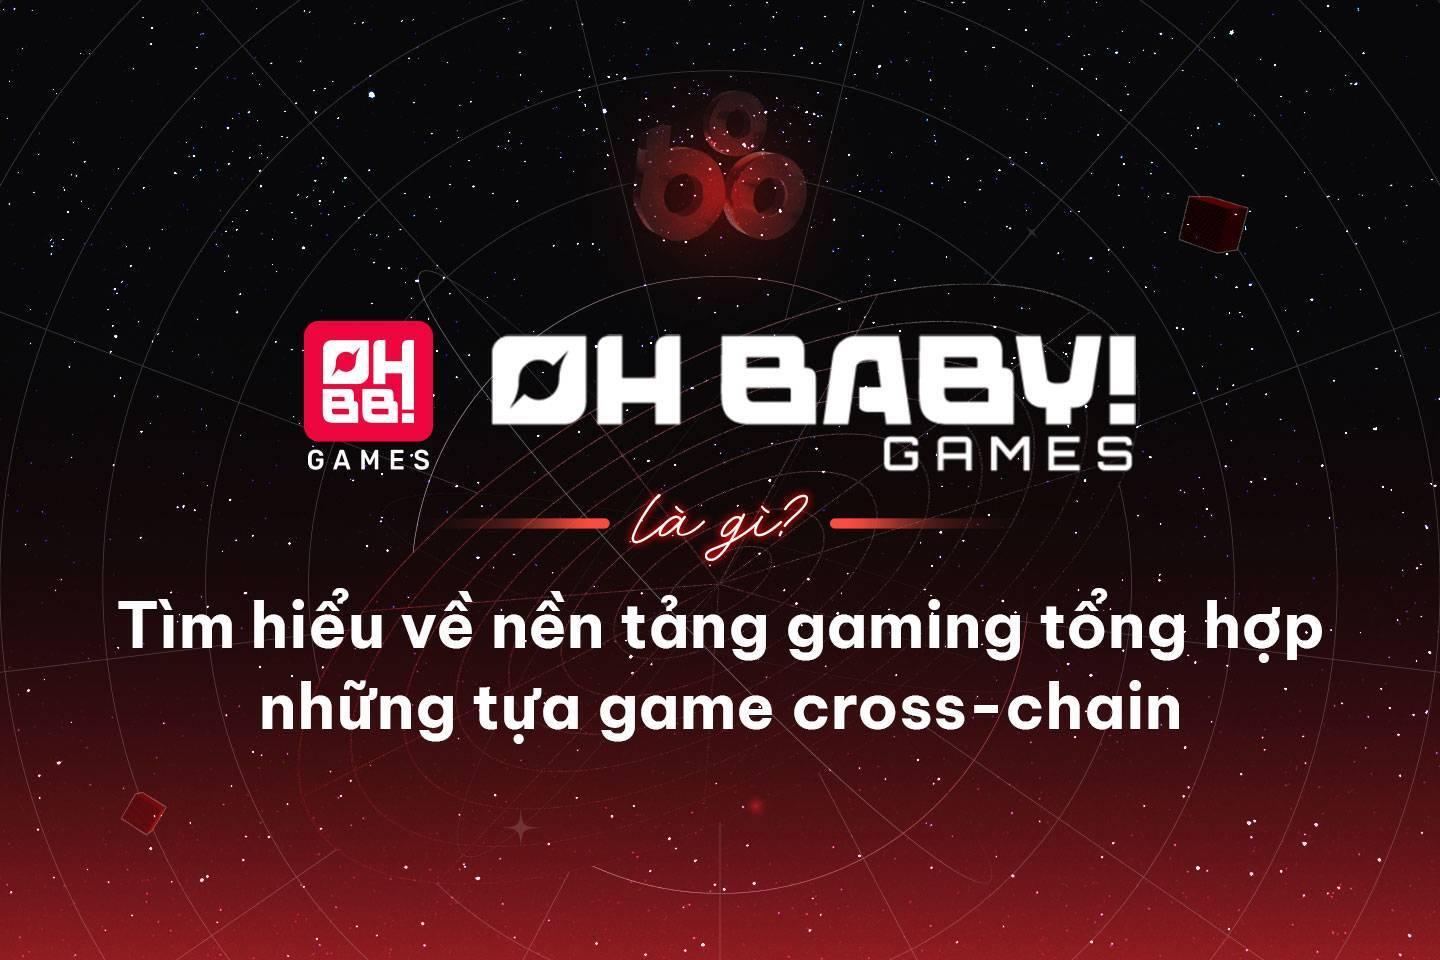 oh-baby-games-la-gi-tim-hieu-ve-nen-tang-gaming-tong-hop-nhung-tua-game-cross-chain